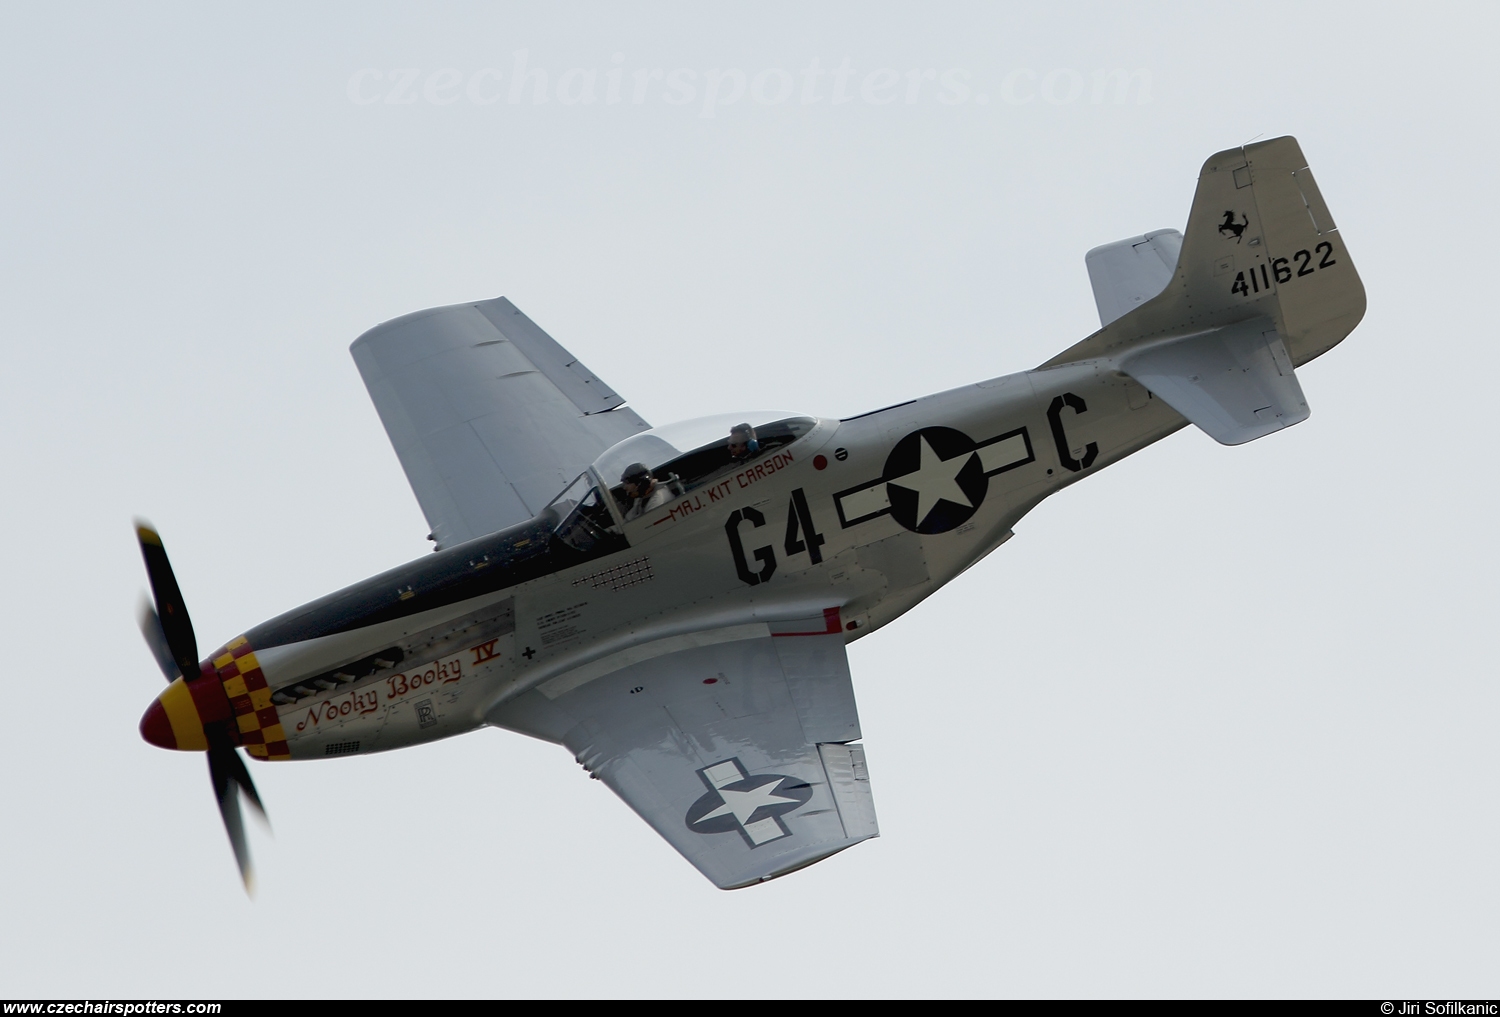 JCB Aviation – North American P-51D Mustang F-AZSB / 411622 / G4-C 